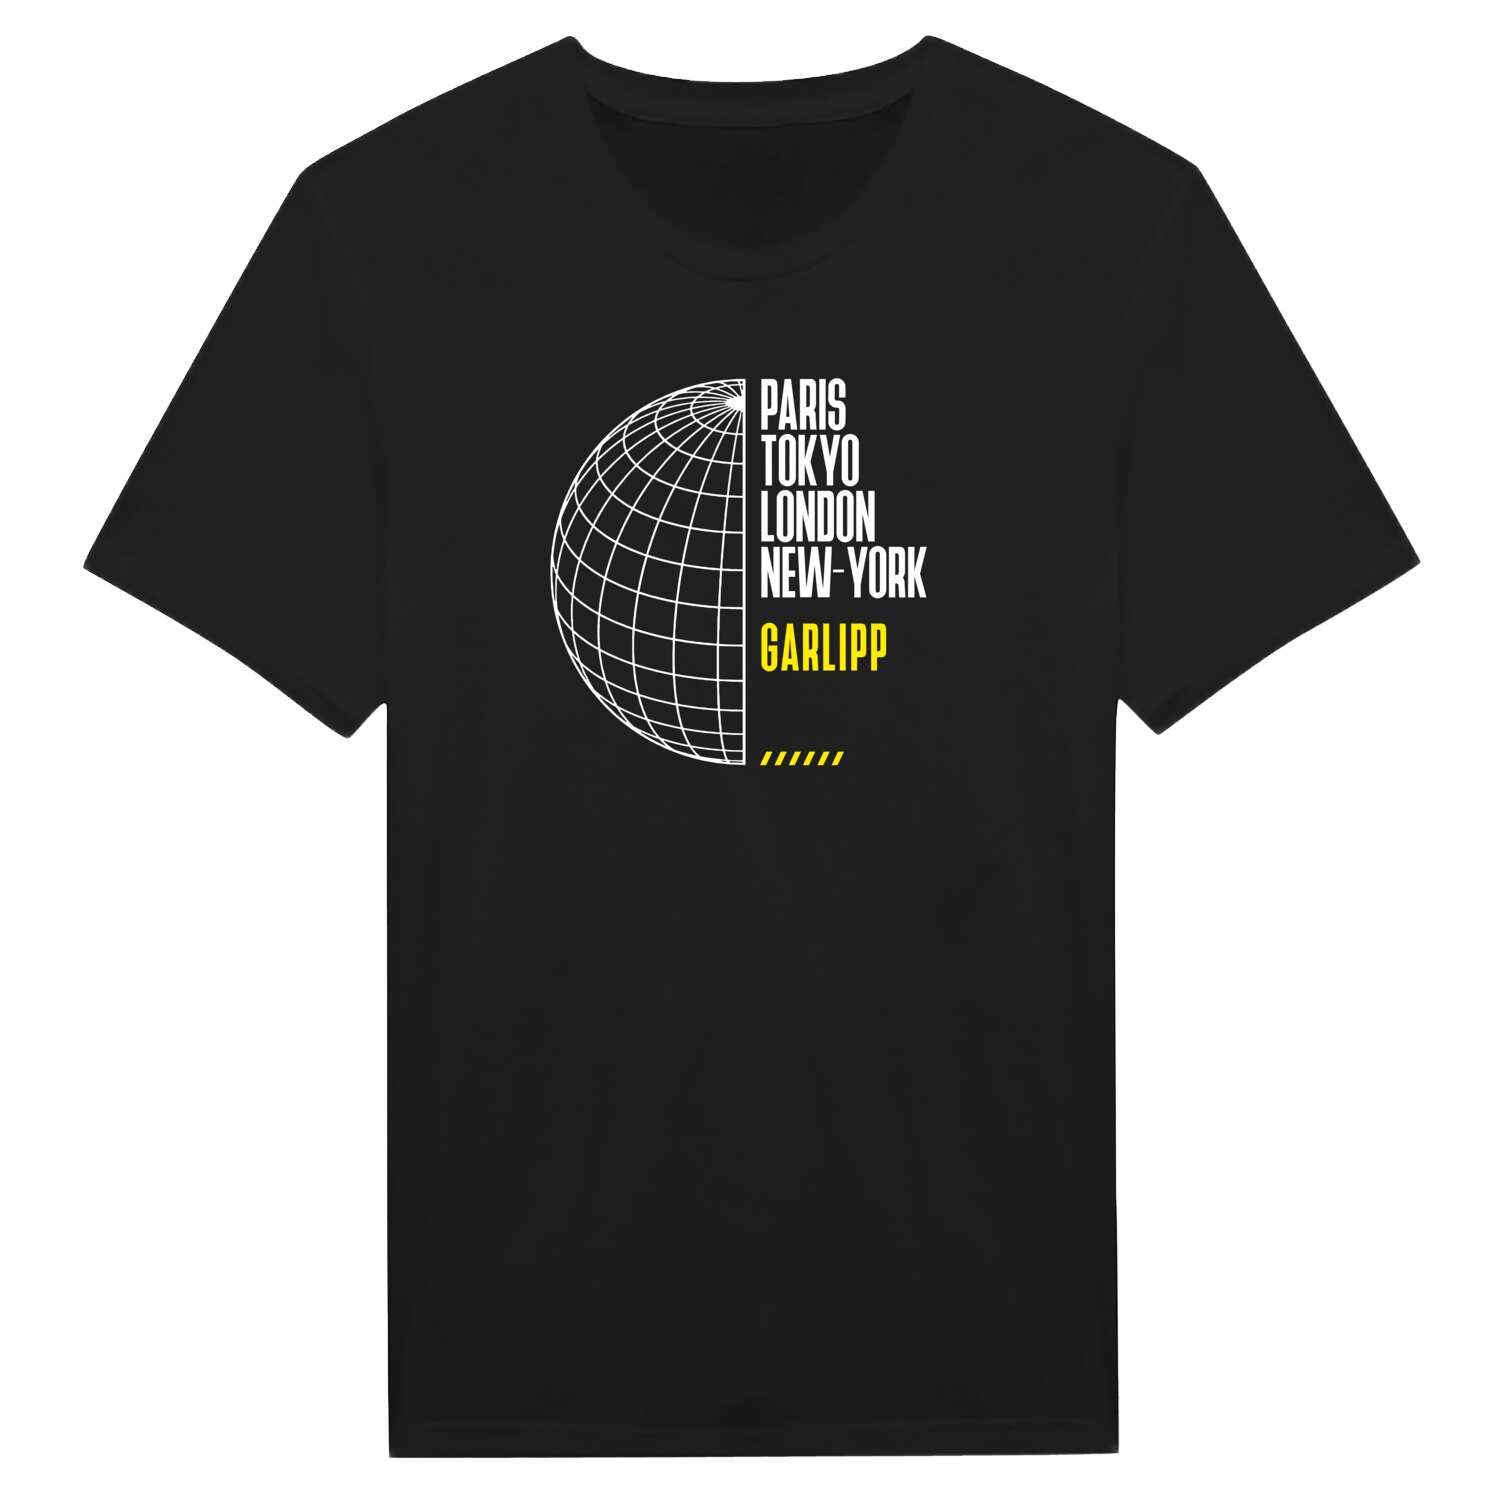 Garlipp T-Shirt »Paris Tokyo London«